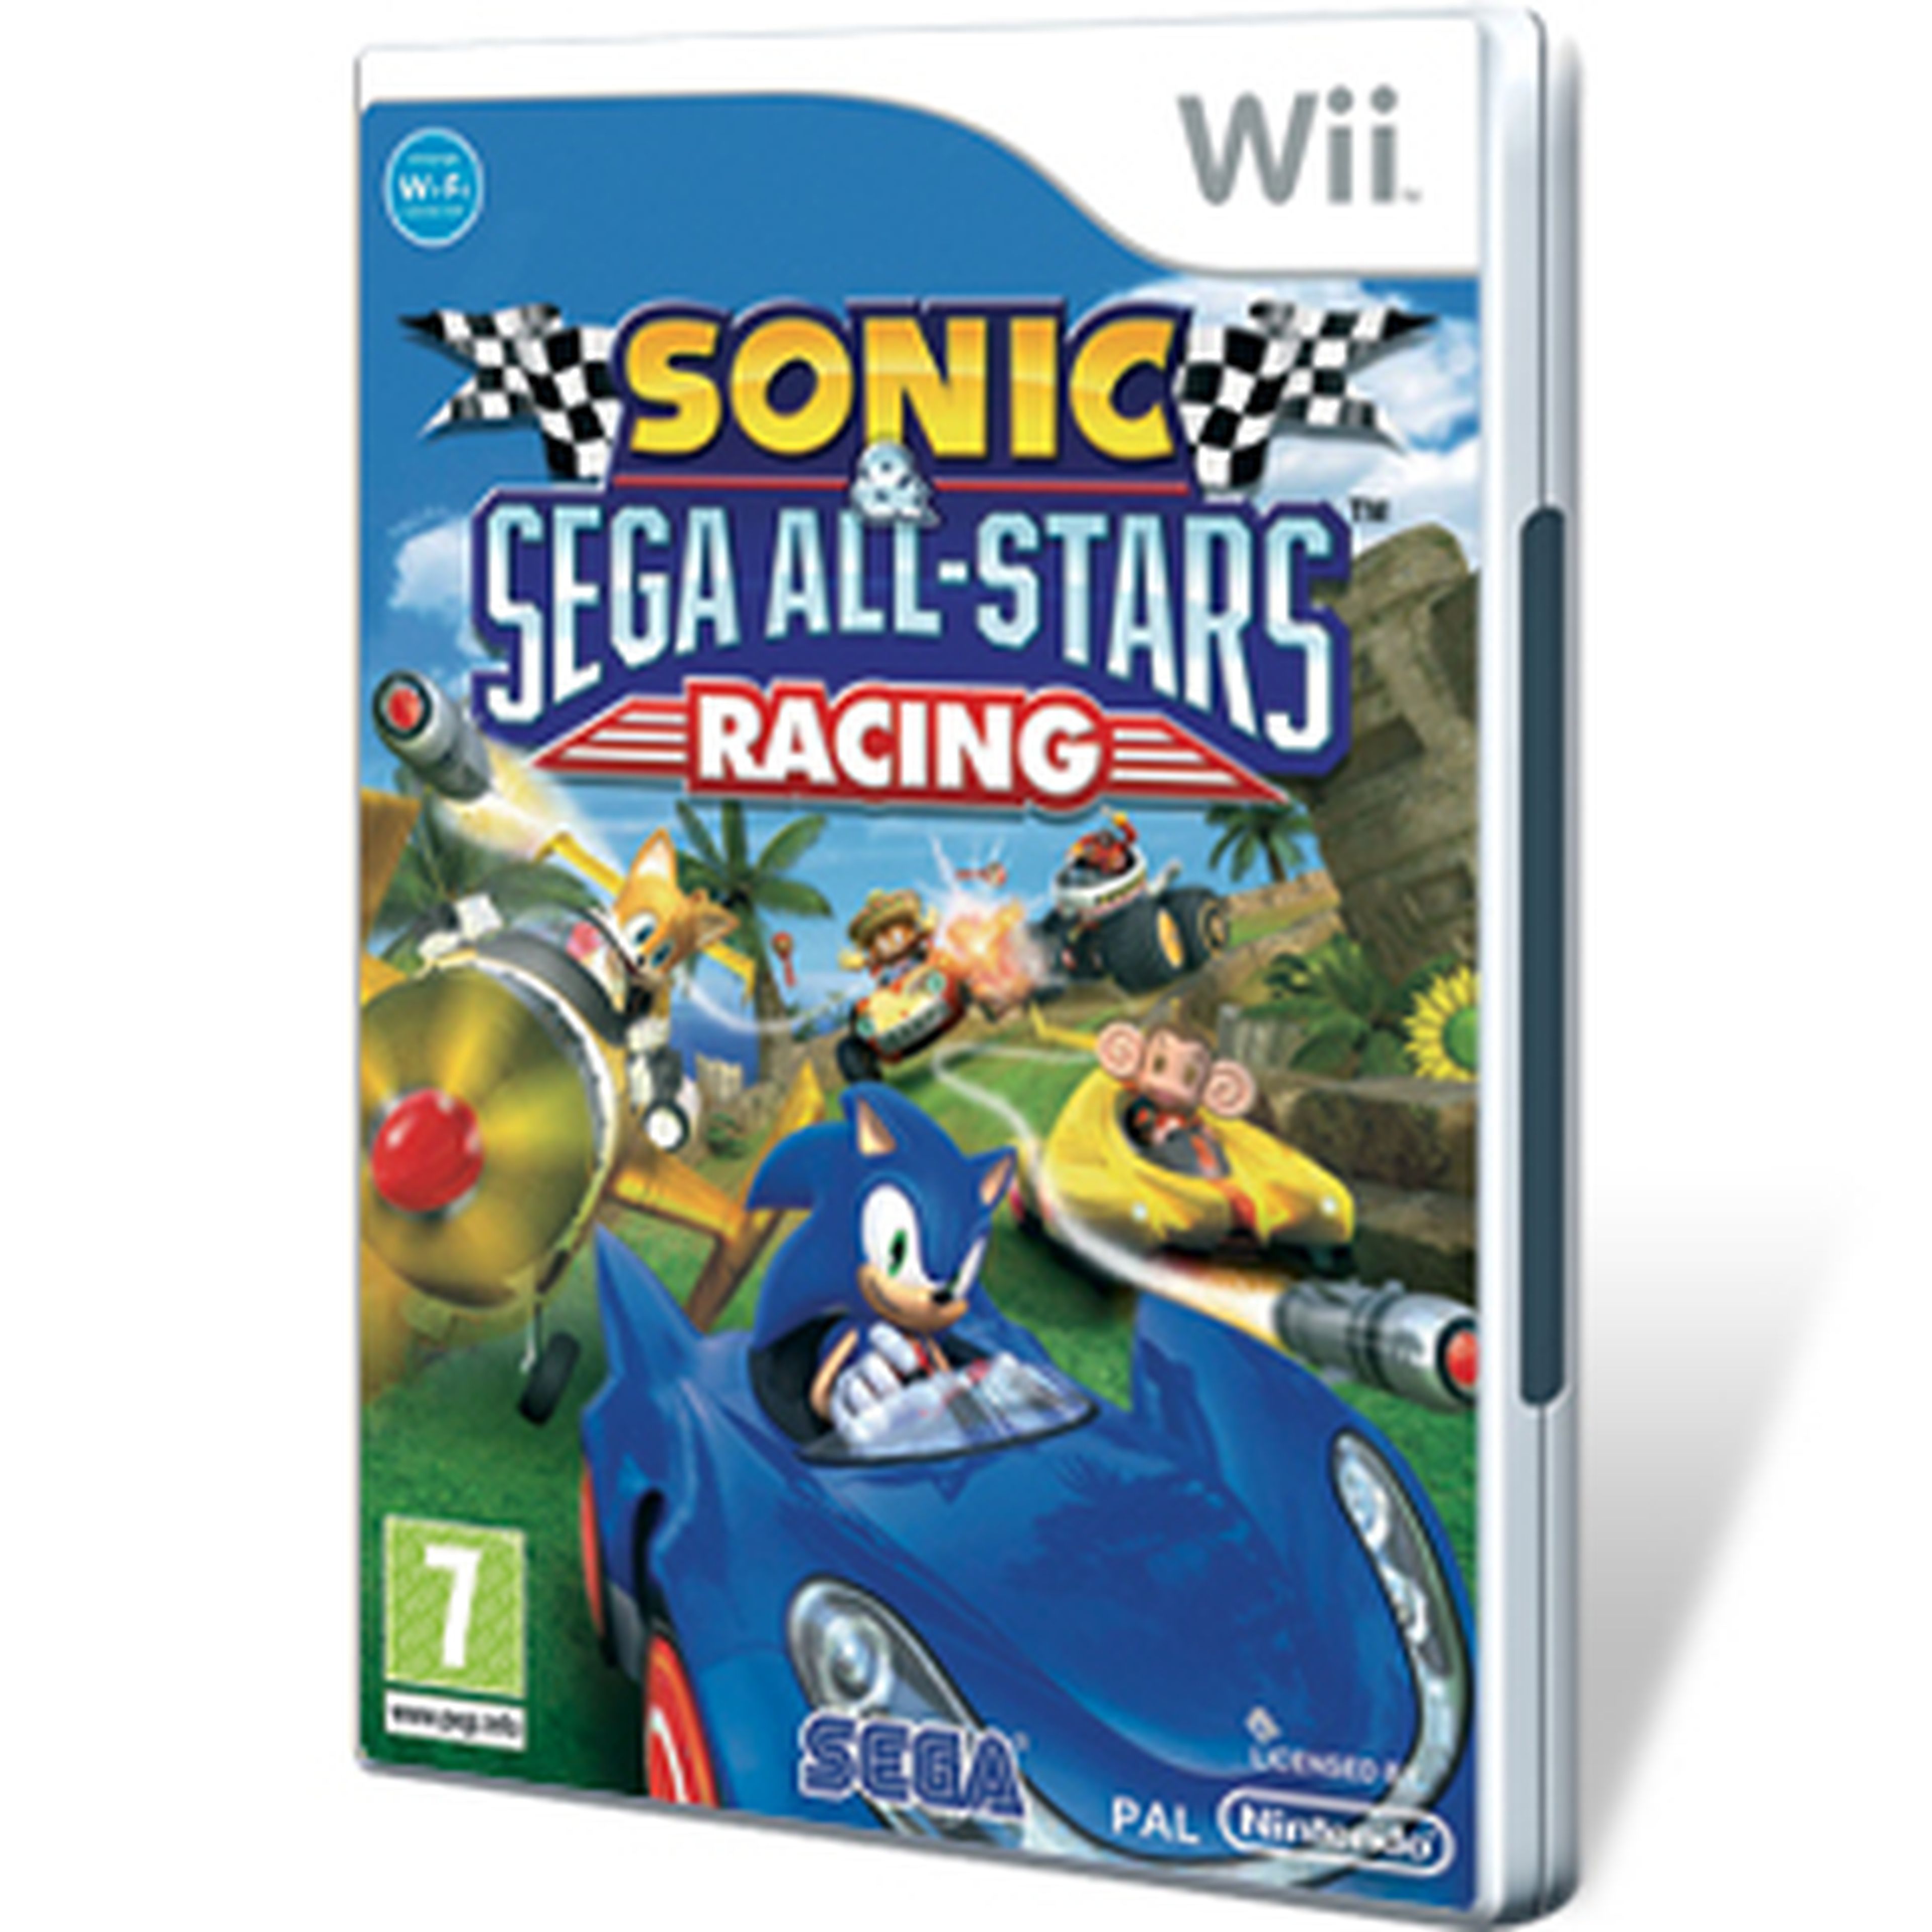 Sonic & SEGA All-Stars Racing para Wii